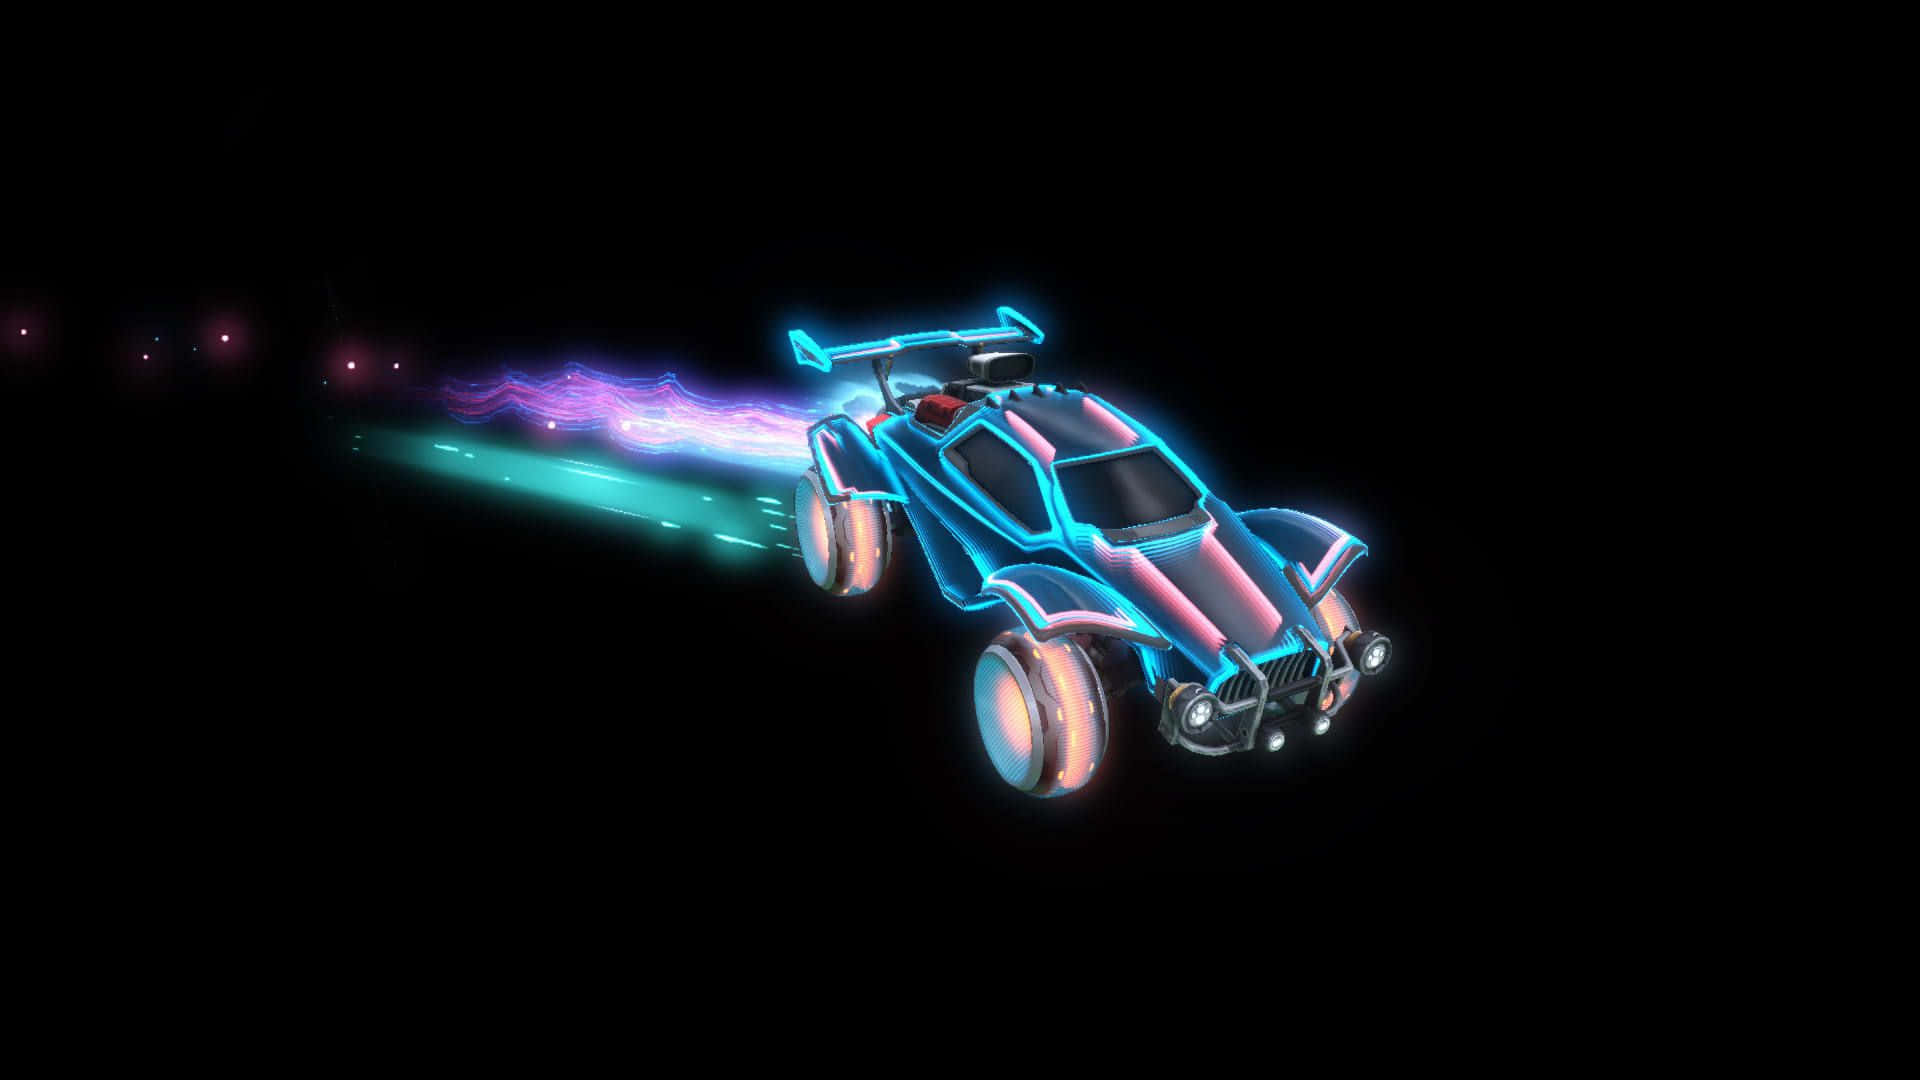 A Neon Car Is Flying Through The Dark